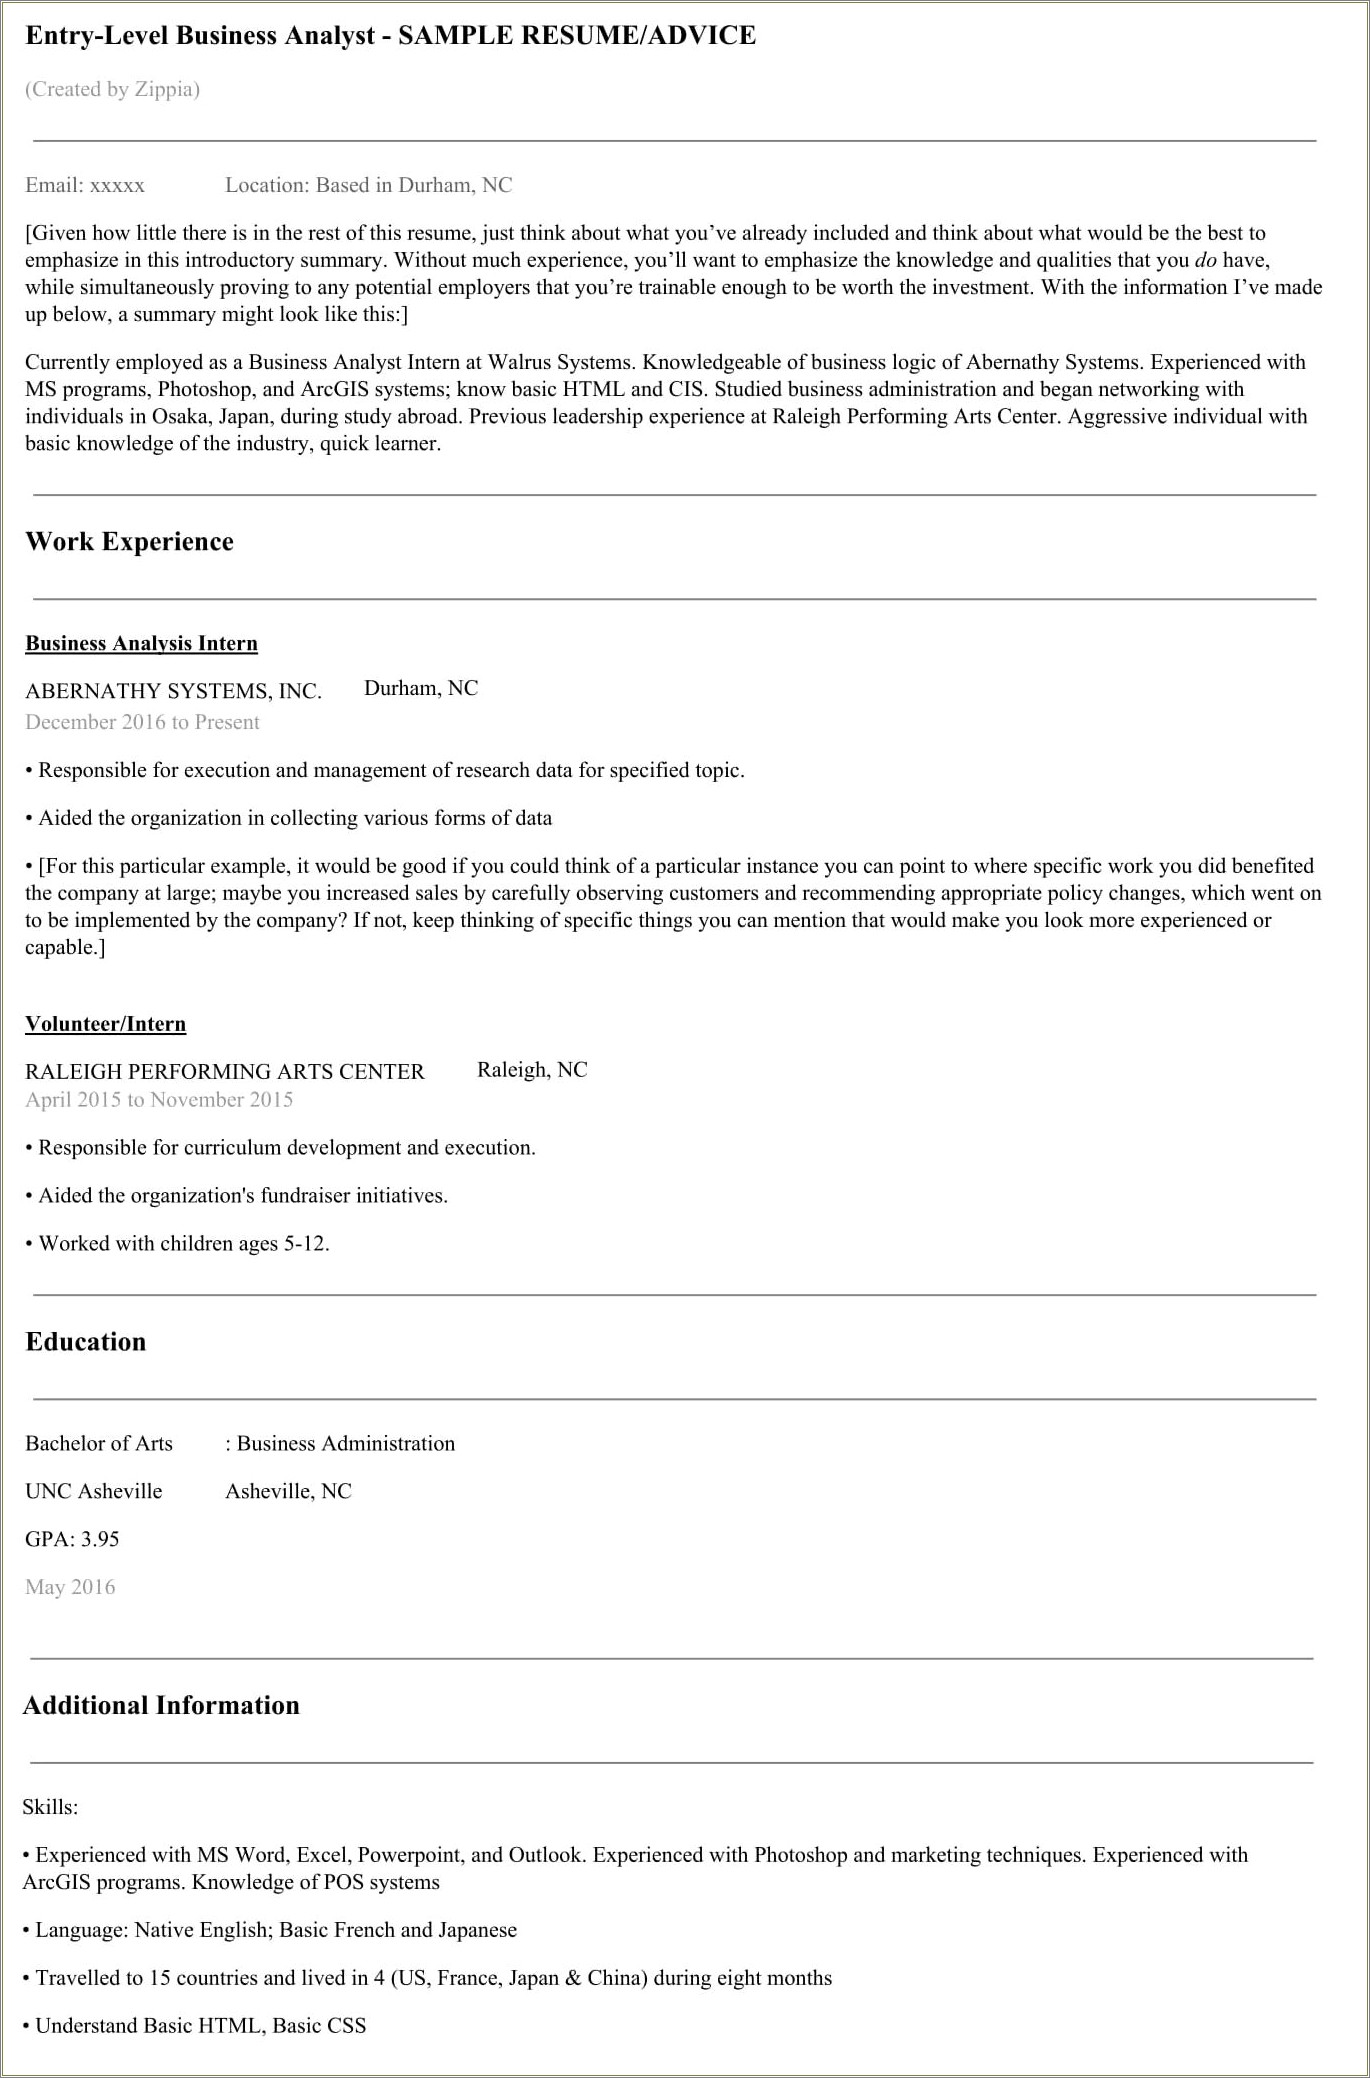 Example Of Senior Business Analyst Resume